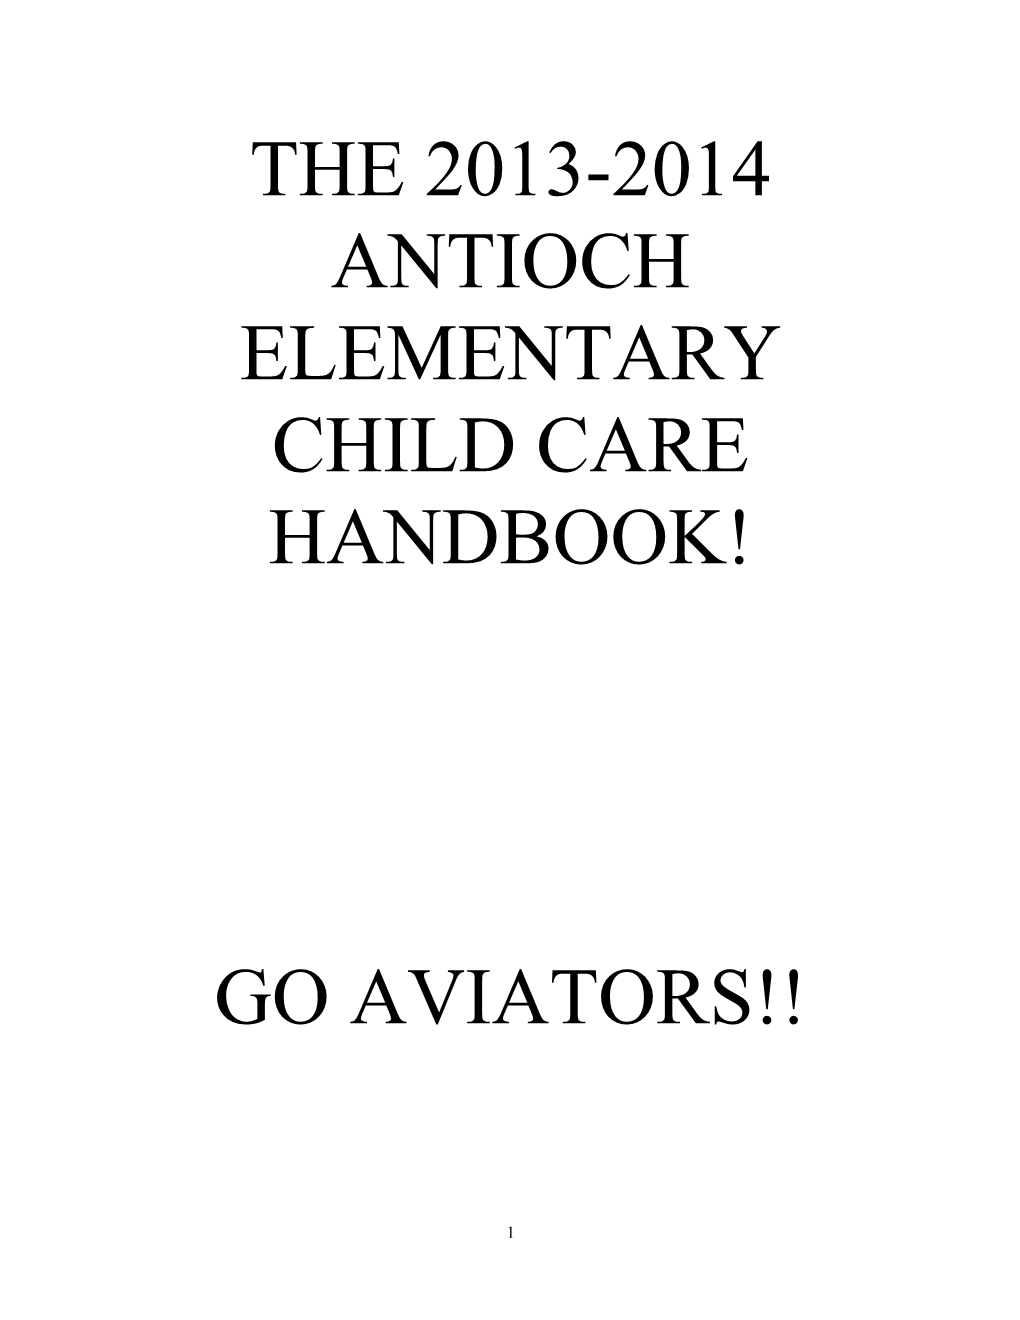 The 1998-1999 Antioch Elementary Child Care Handbook